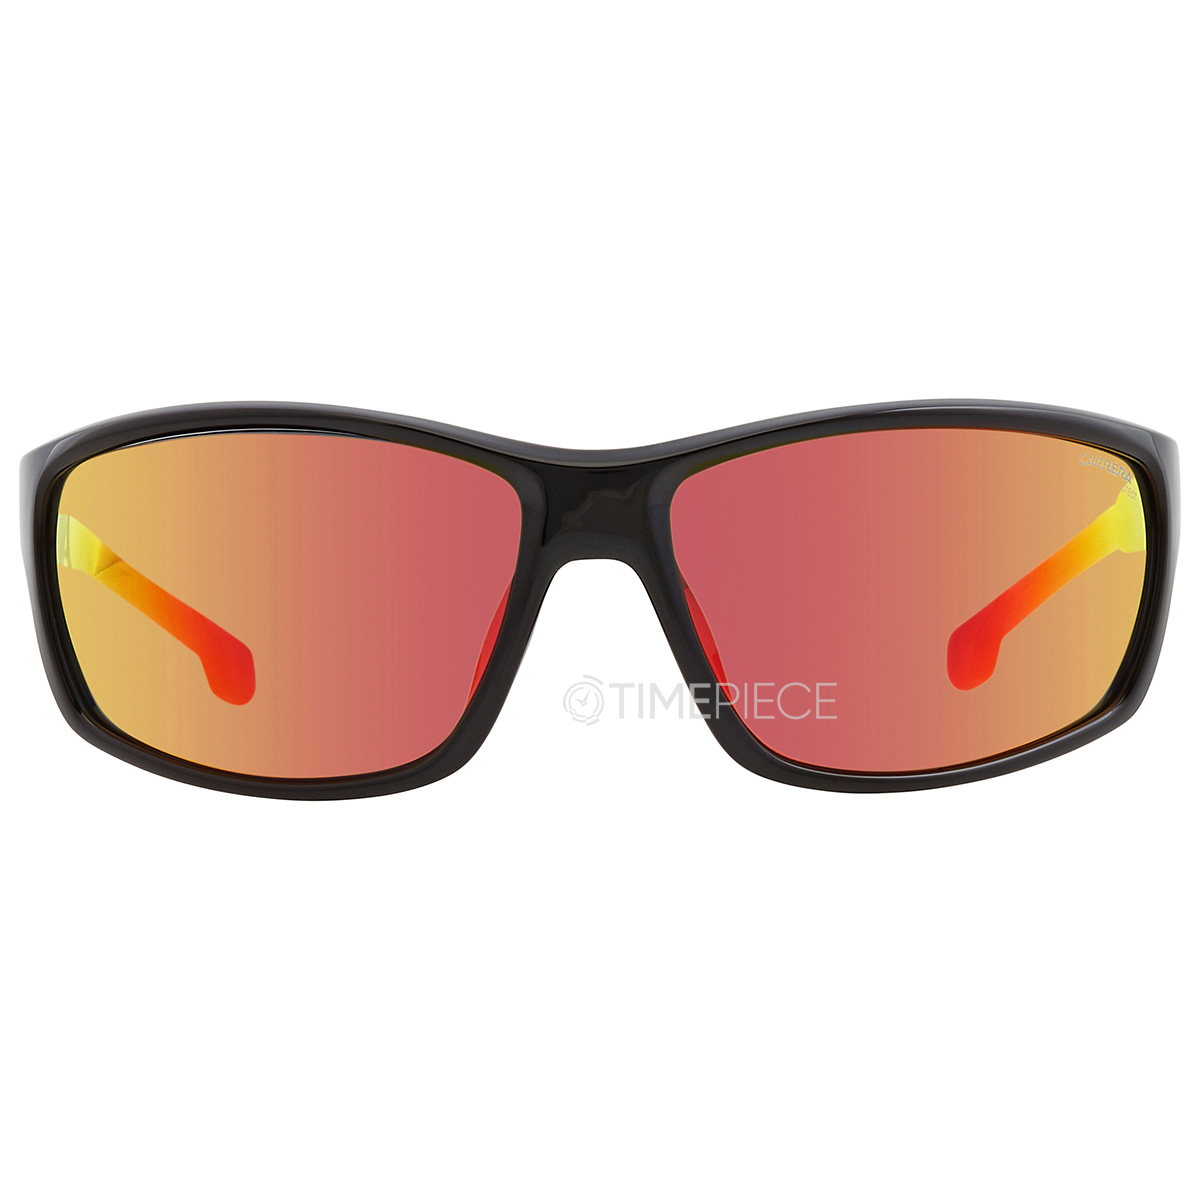 Carrera Red Shield Mens Sunglasses CARRERA DUCATI 002/S 0OIT/UZ 68